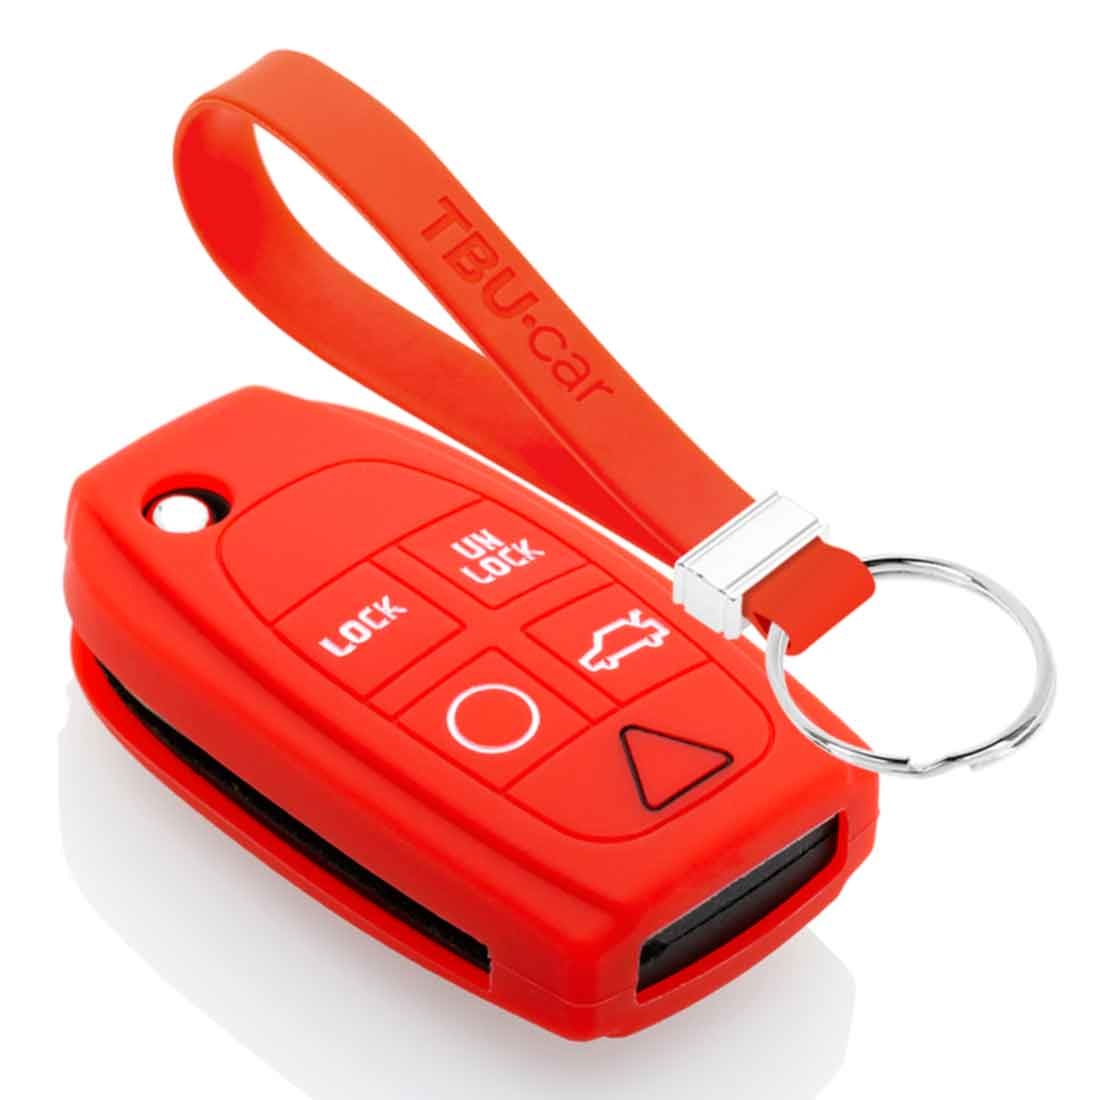 TBU car TBU car Autoschlüssel Hülle kompatibel mit Volvo 5 Tasten - Schutzhülle aus Silikon - Auto Schlüsselhülle Cover in Rot